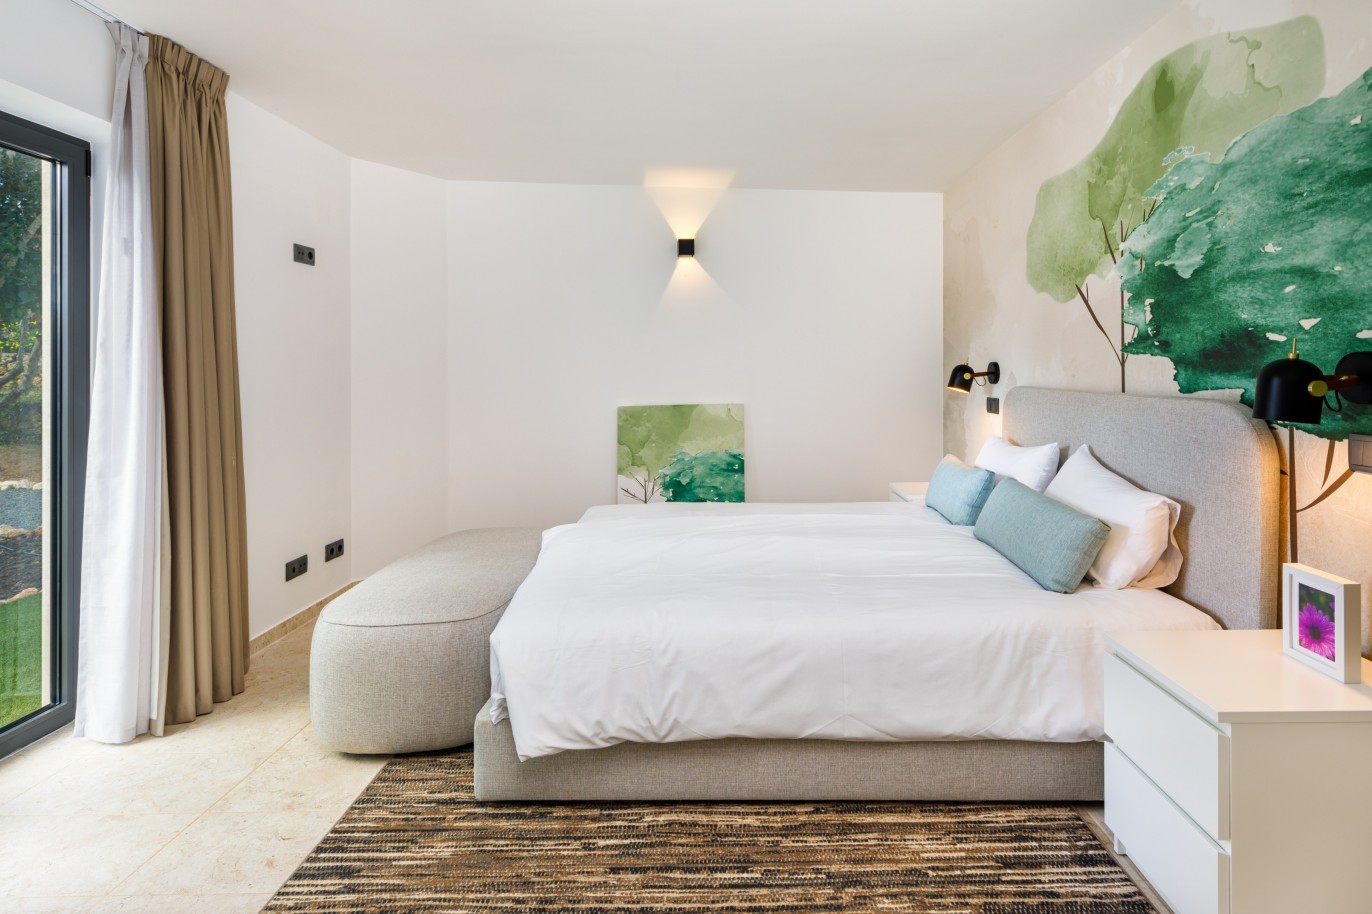 5 Bedroom Villa in luxury condominium with private pool, Carvoeiro, Algarve_259450